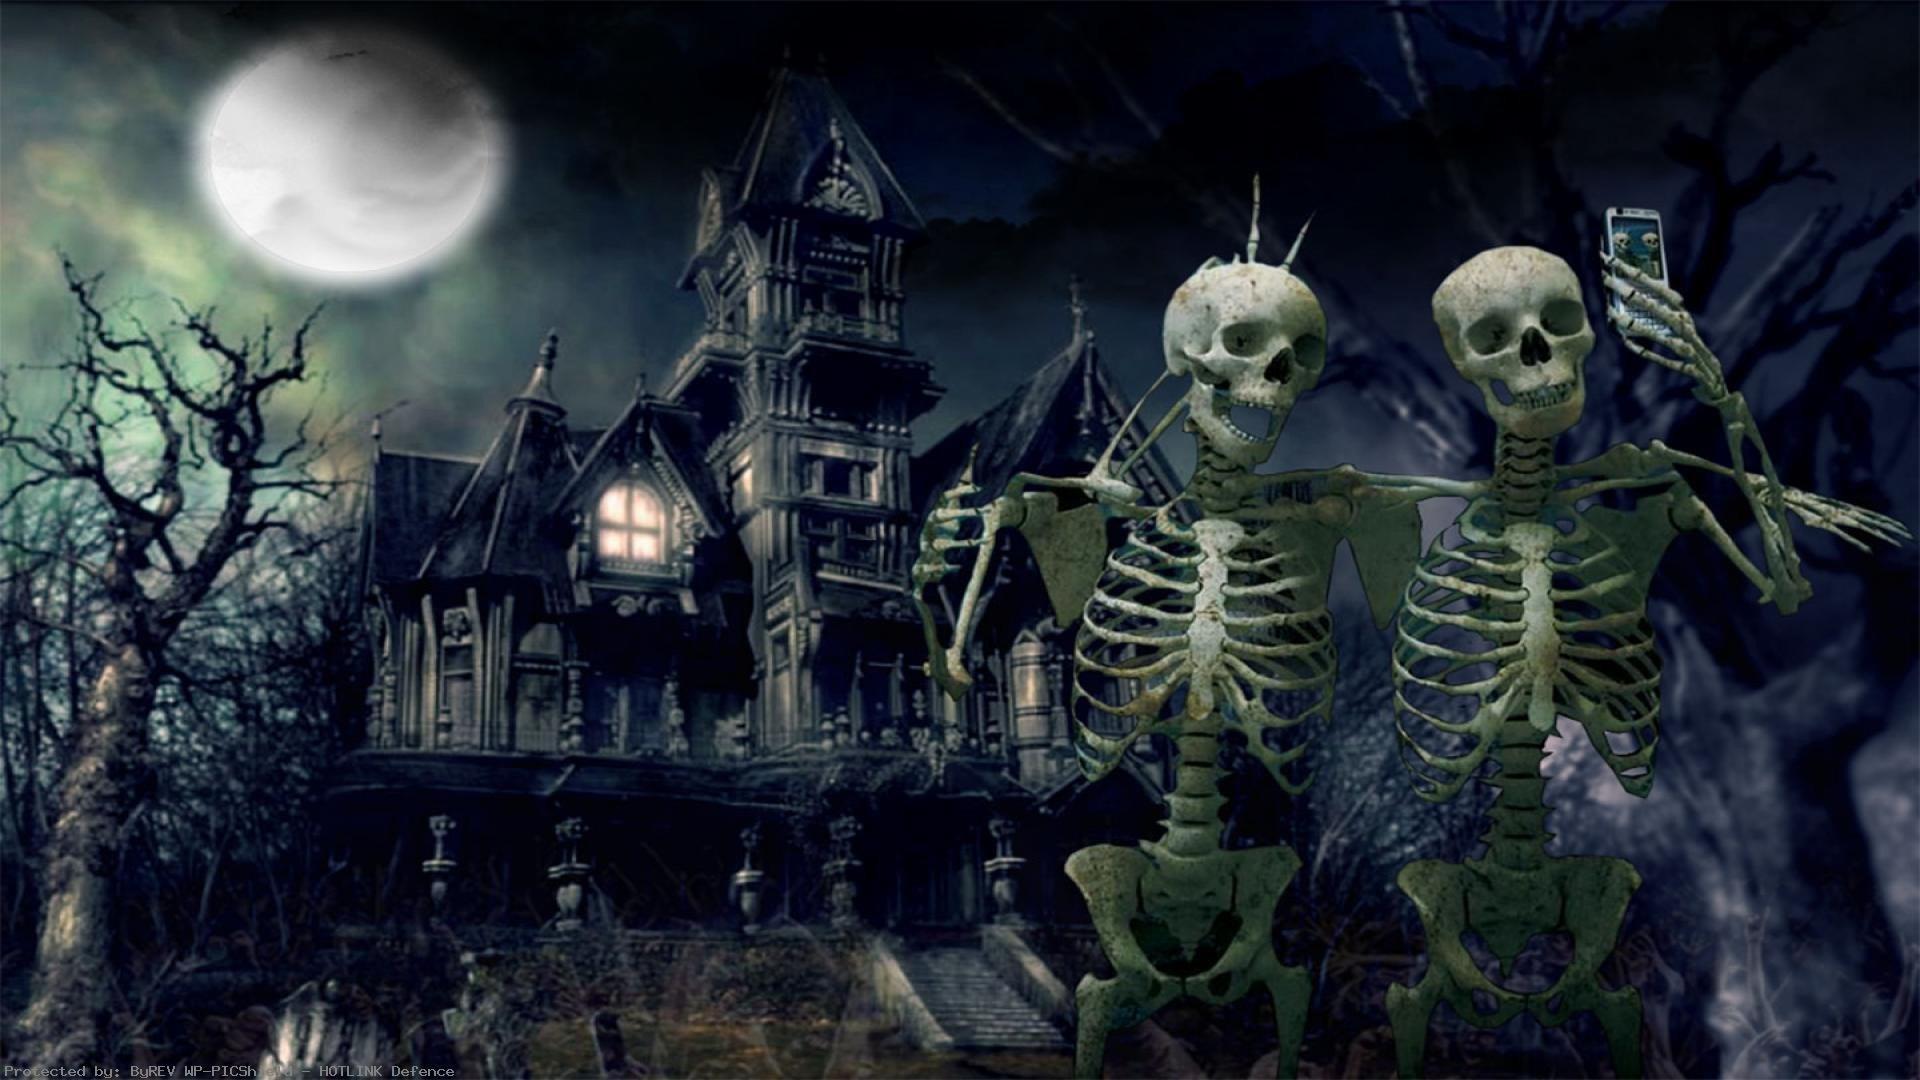 Haunted House Wallpaper. Halloween Creepy Scary House